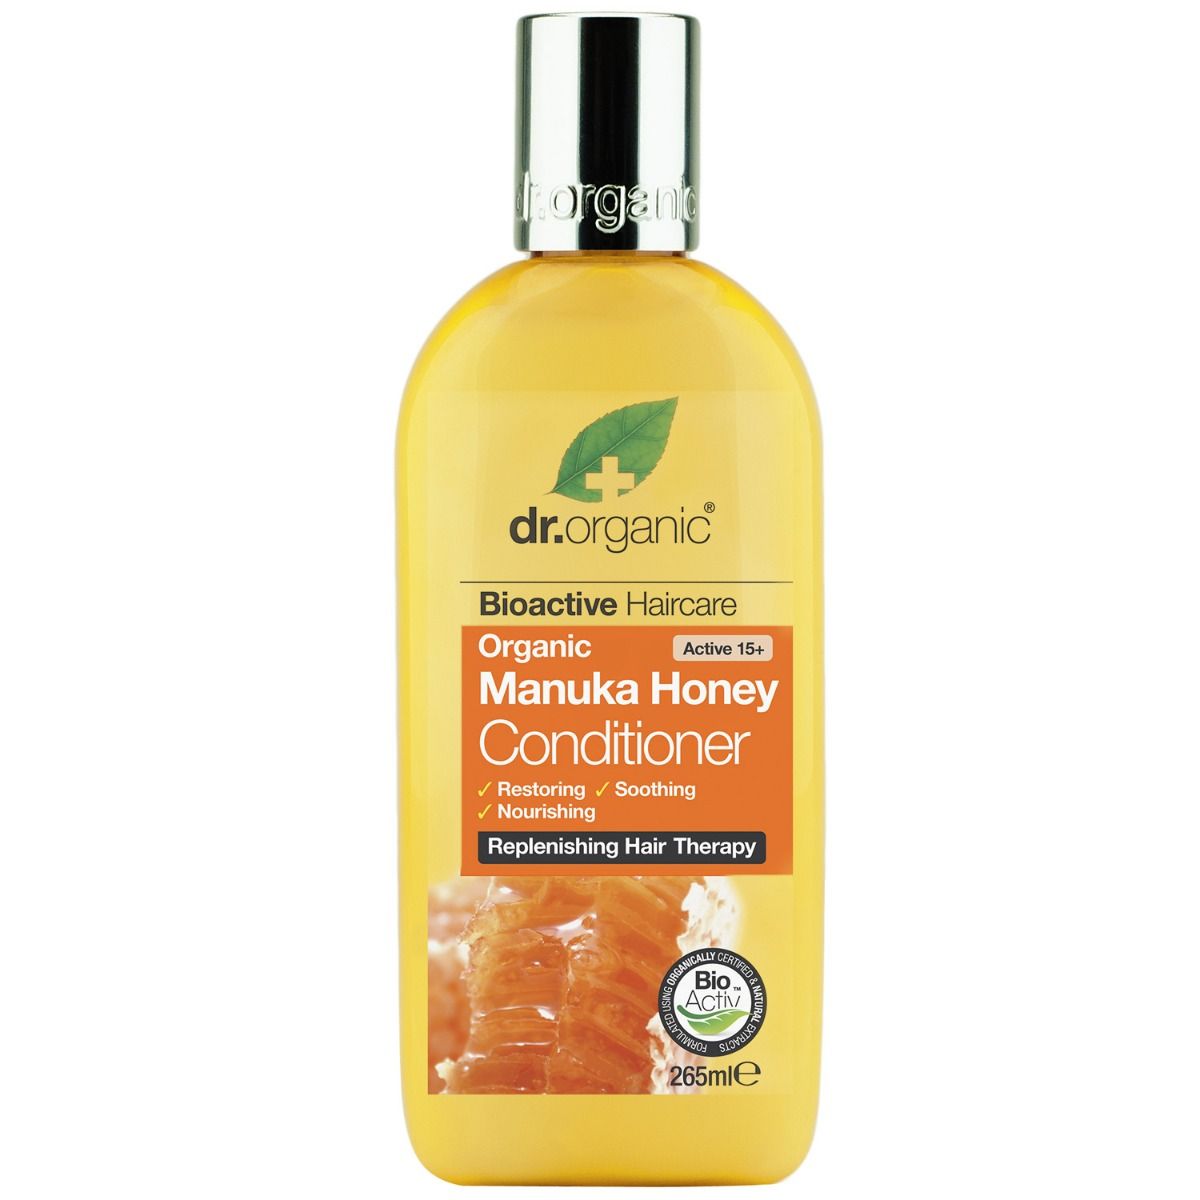 Buy dr.organic Manuka Honey Conditioner, 265 ml Online